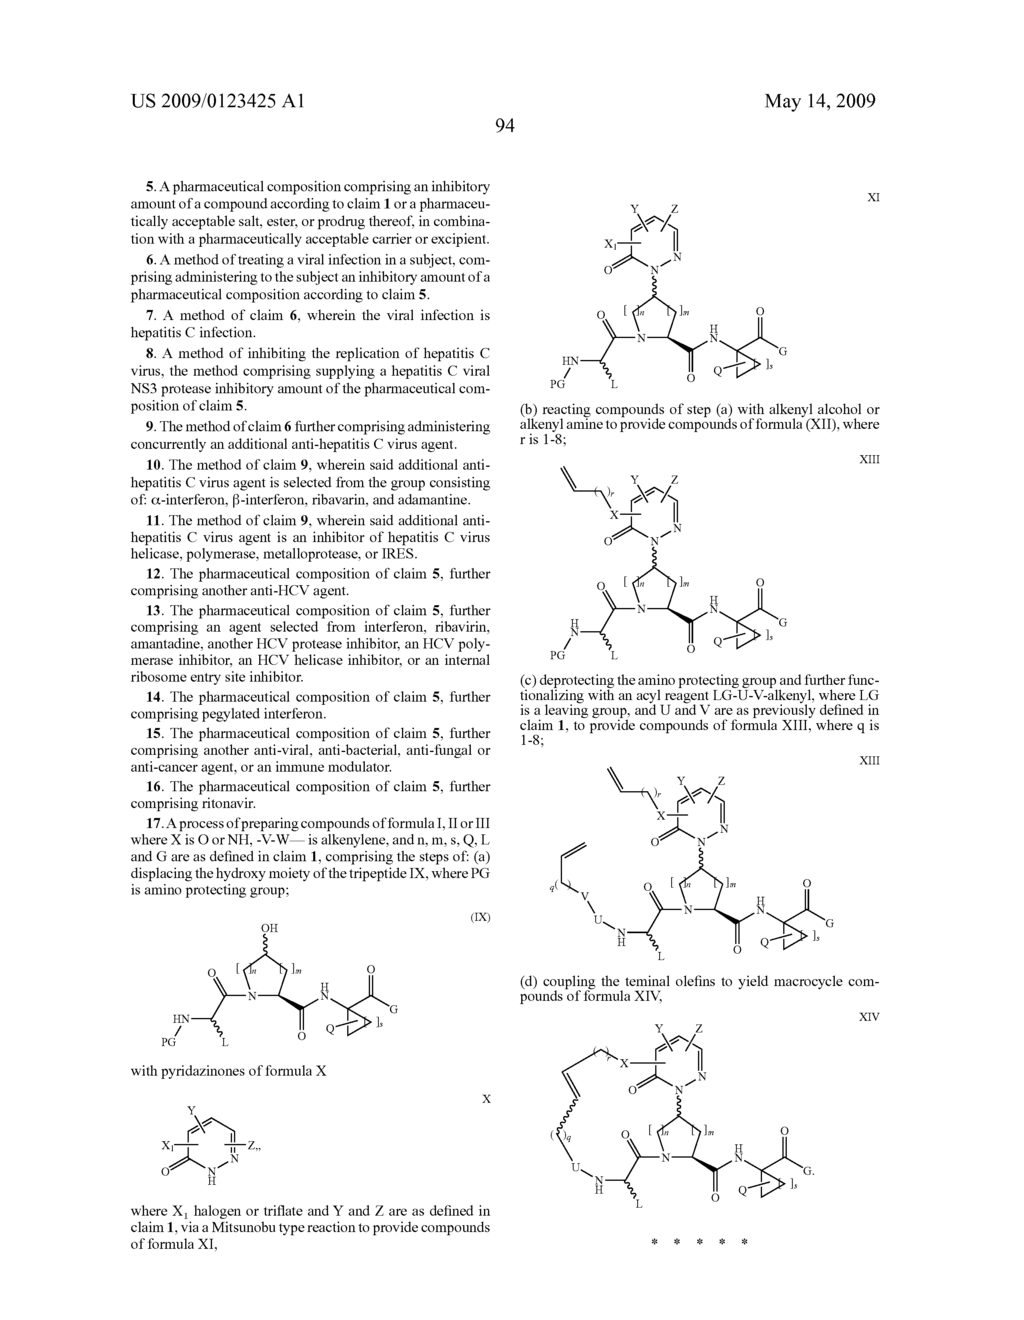 MACROCYCLIC, PYRIDAZINONE-CONTAINING HEPATITIS C SERINE PROTEASE INHIBITORS - diagram, schematic, and image 95